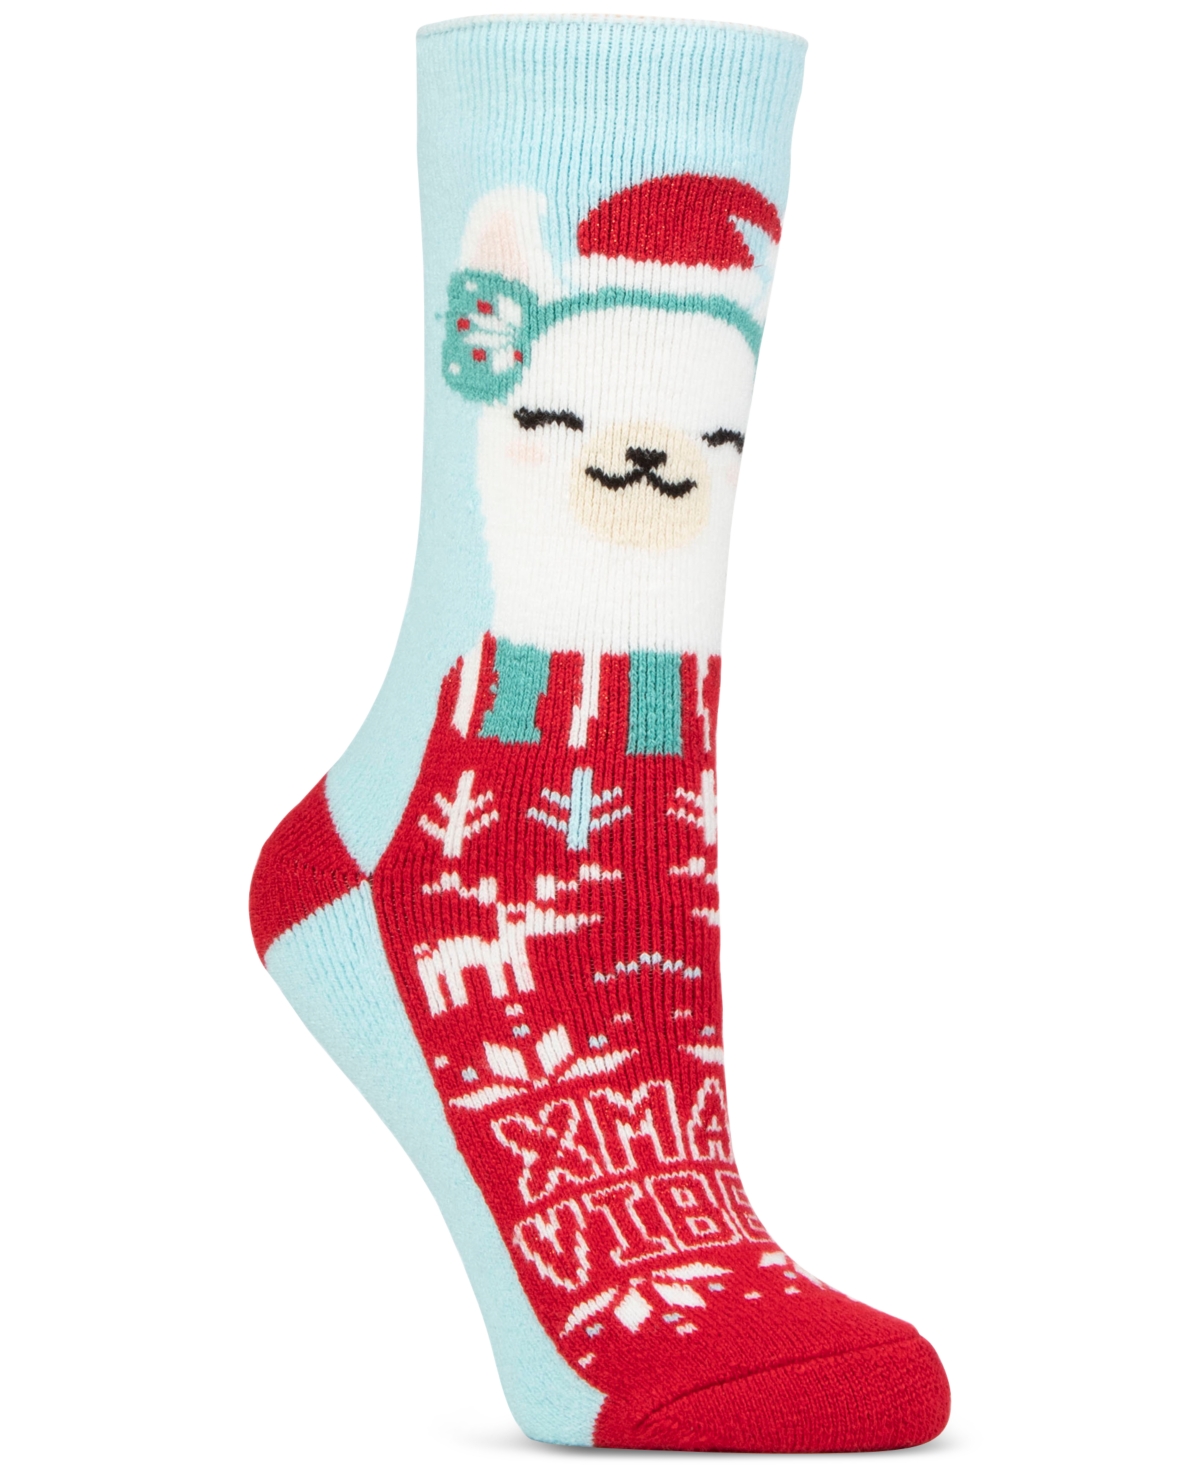 Women's Thermal Lite Festive Winter Socks - Multi